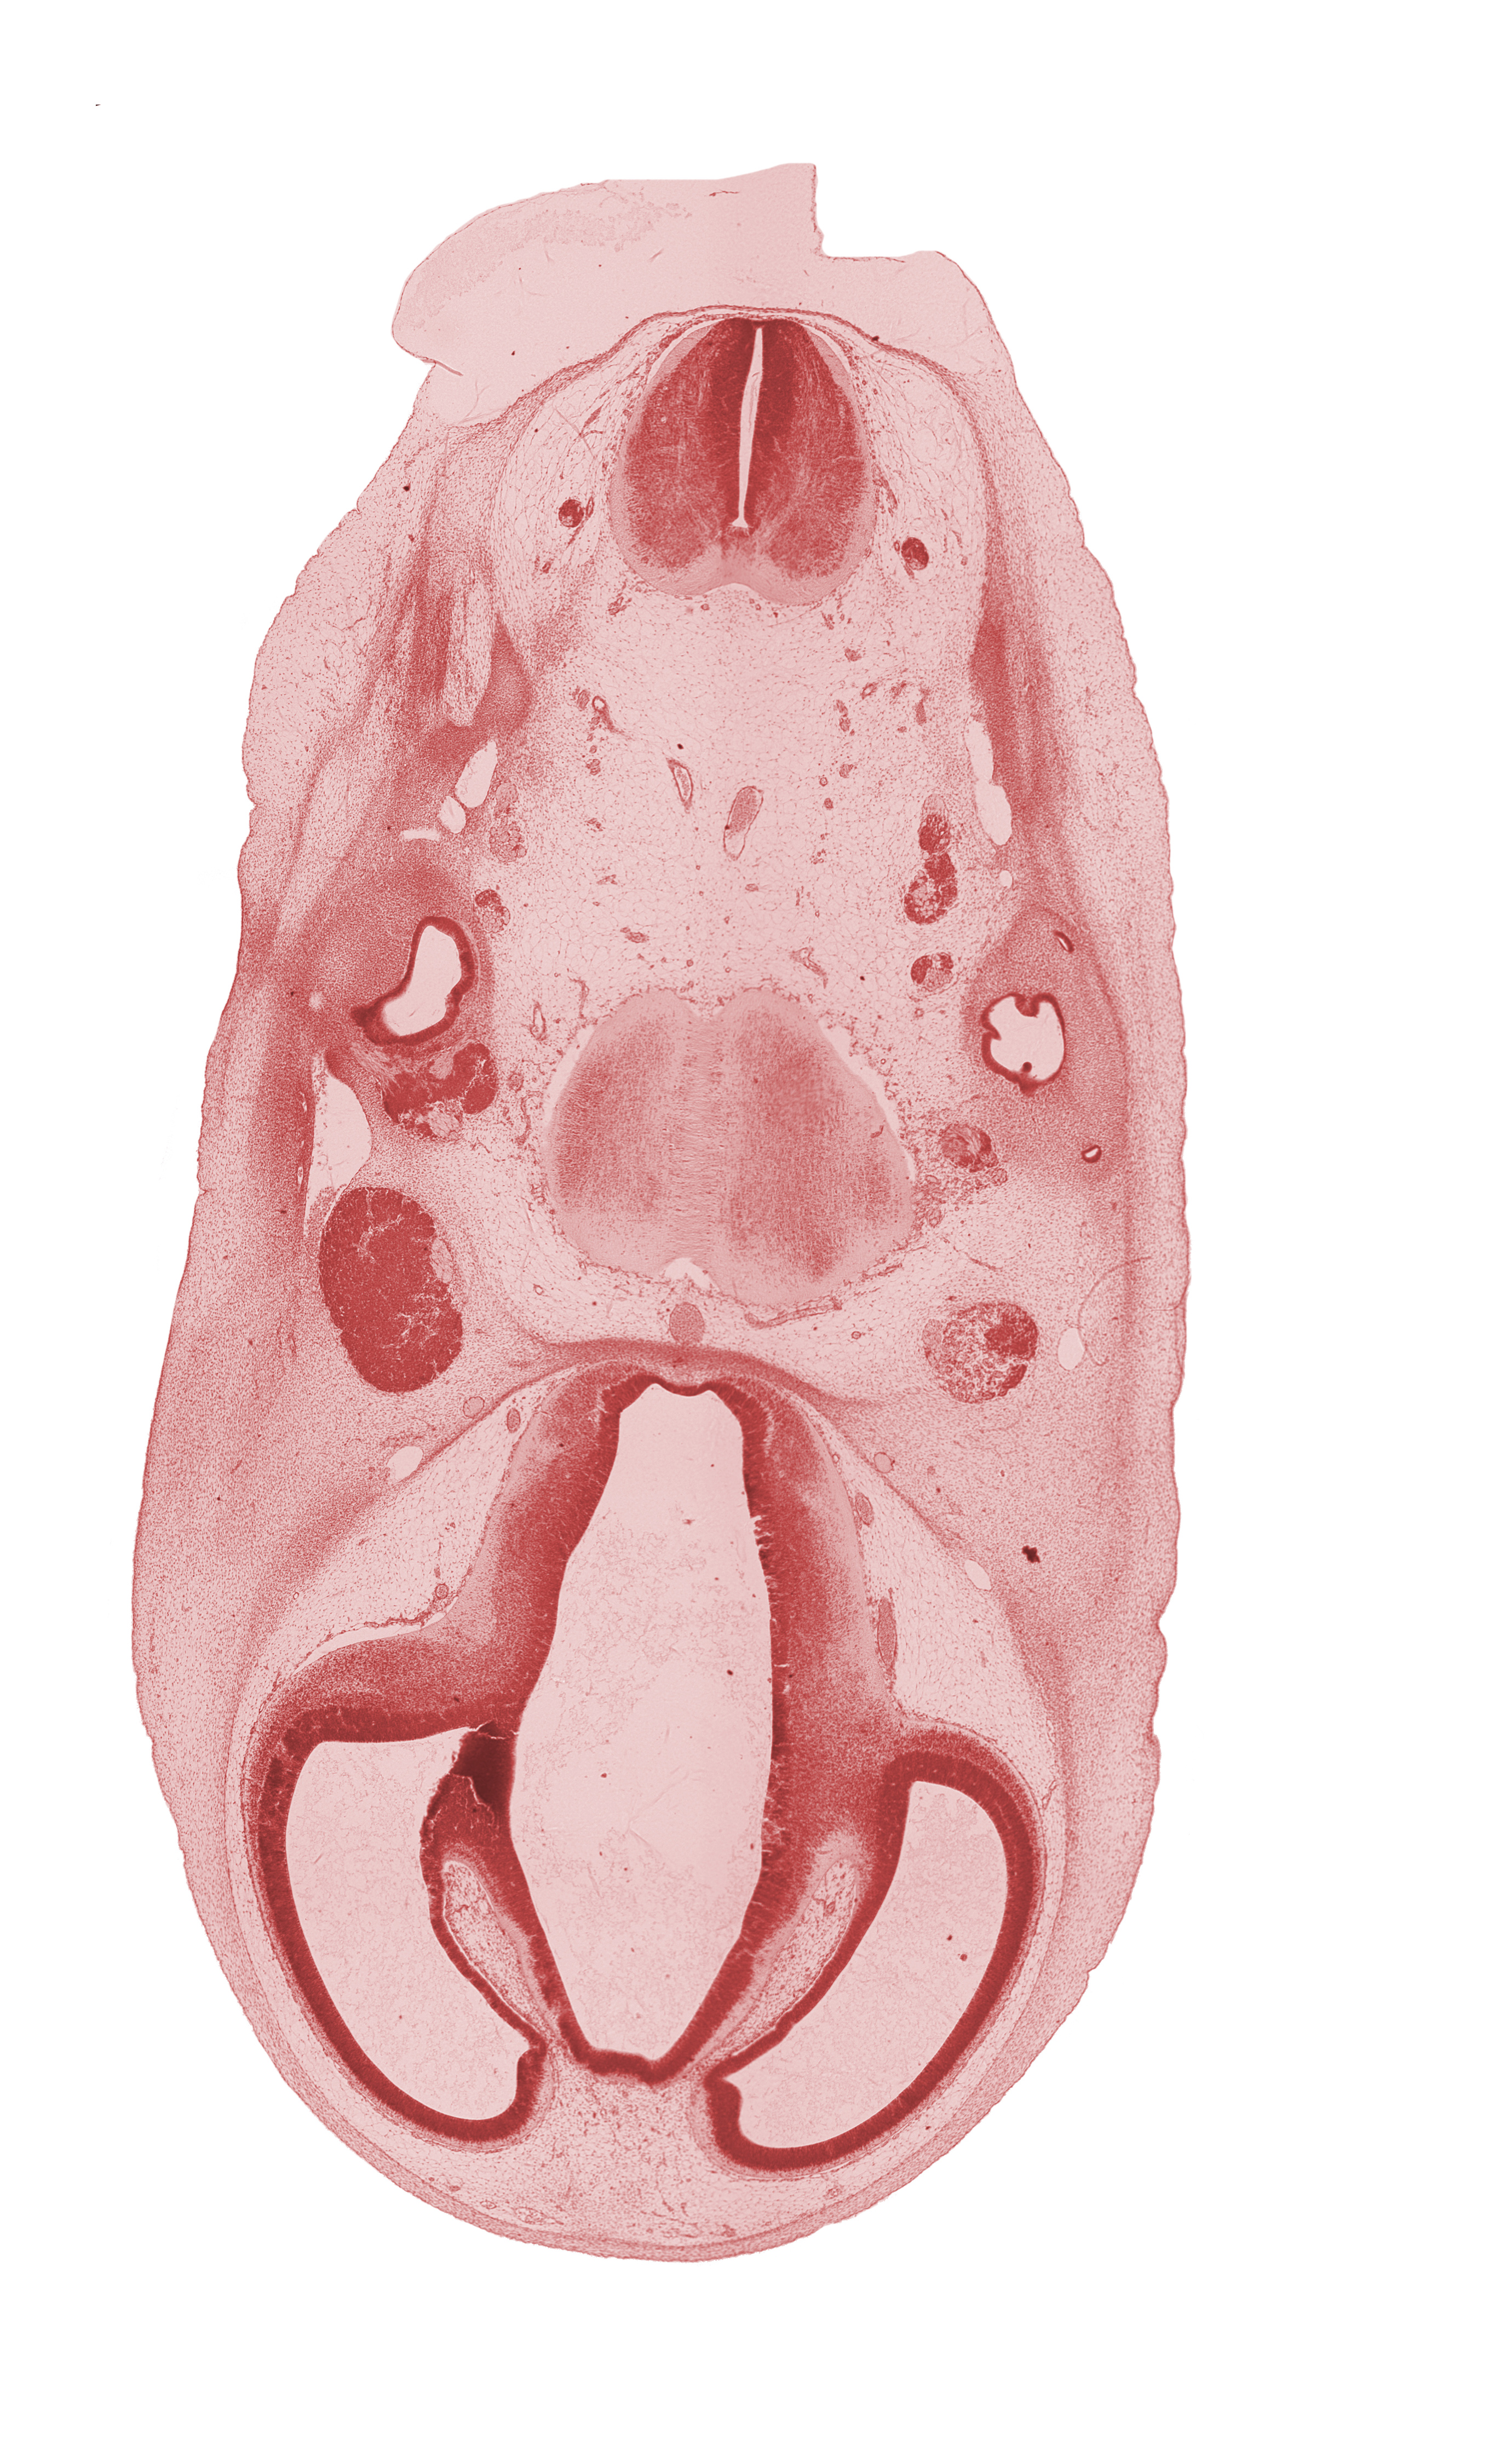 accessory nerve (CN XI), anterior semicircular duct, artifact separation(s), basilar artery, hippocampal thickening, hypothalamus, left vertebral artery, pons region (metencephalon), right vertebral artery, roof of diencephalon, root of abducens nerve (CN VI), root of trigeminal nerve (CN V), spinal accessory nerve (CN XI), subarachnoid space, superior ganglion of glossopharyngeal nerve (CN IX), superior ganglion of vagus nerve (CN X), transition region, trigeminal ganglion (CN V)